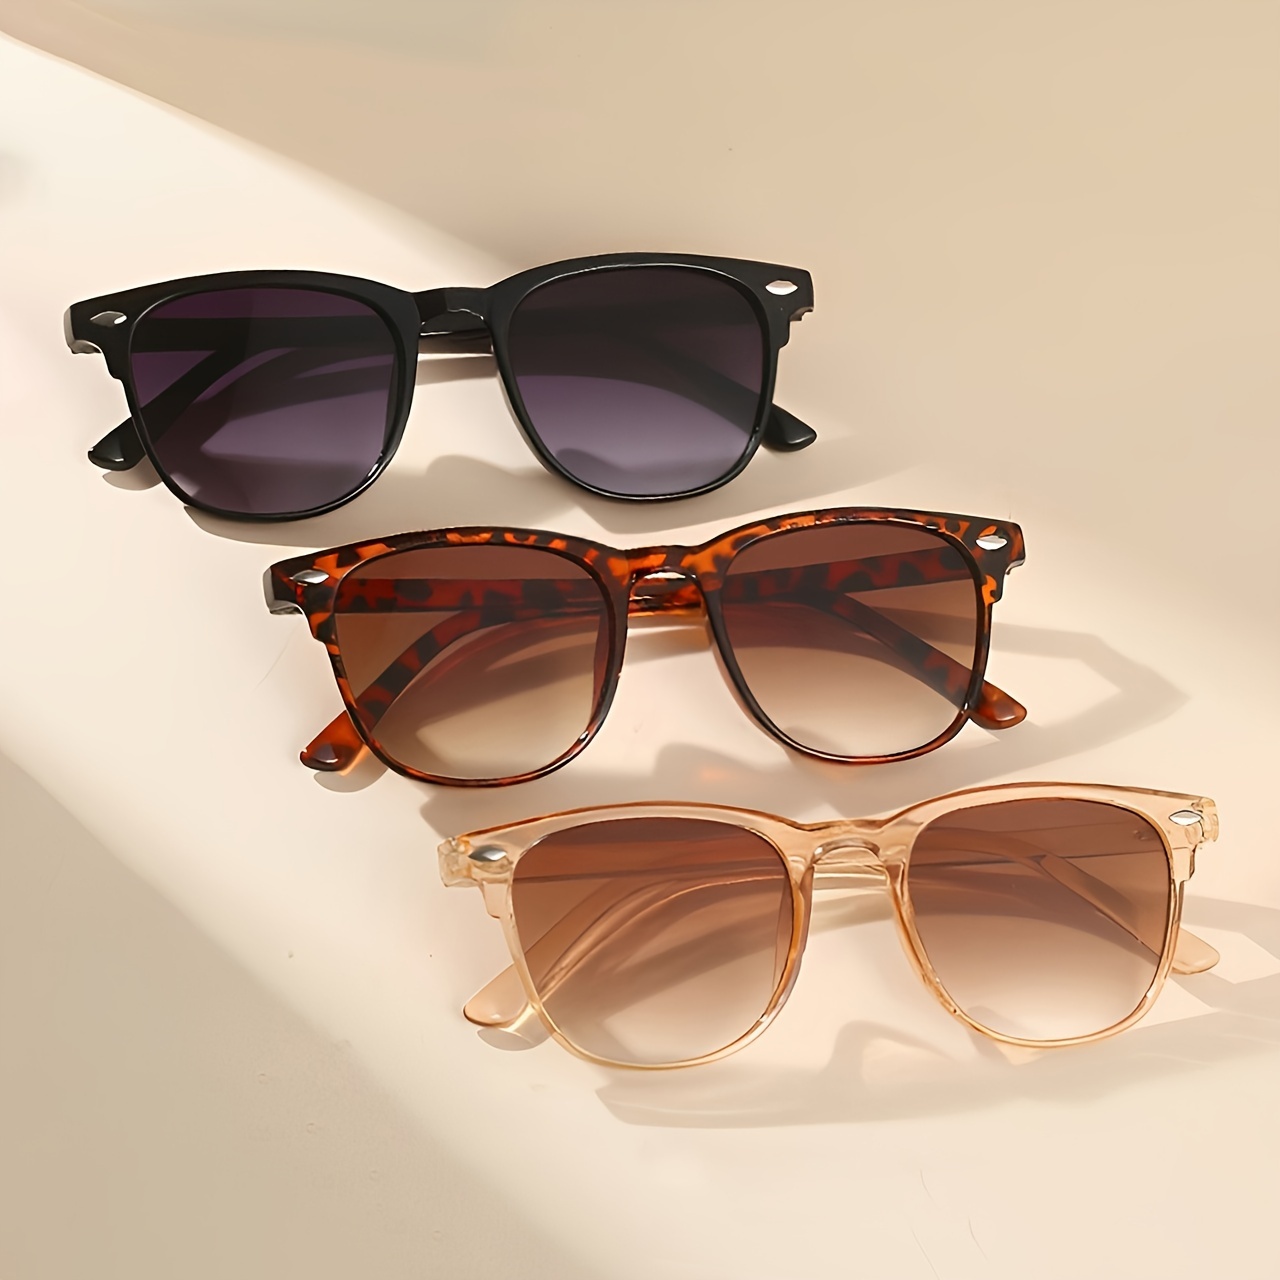 

Unisex Retro Square Fashion Glasses Gradient Fashion Glasses For Women Men Anti Glare Sun Shades Glasses For Driving Beach Travel